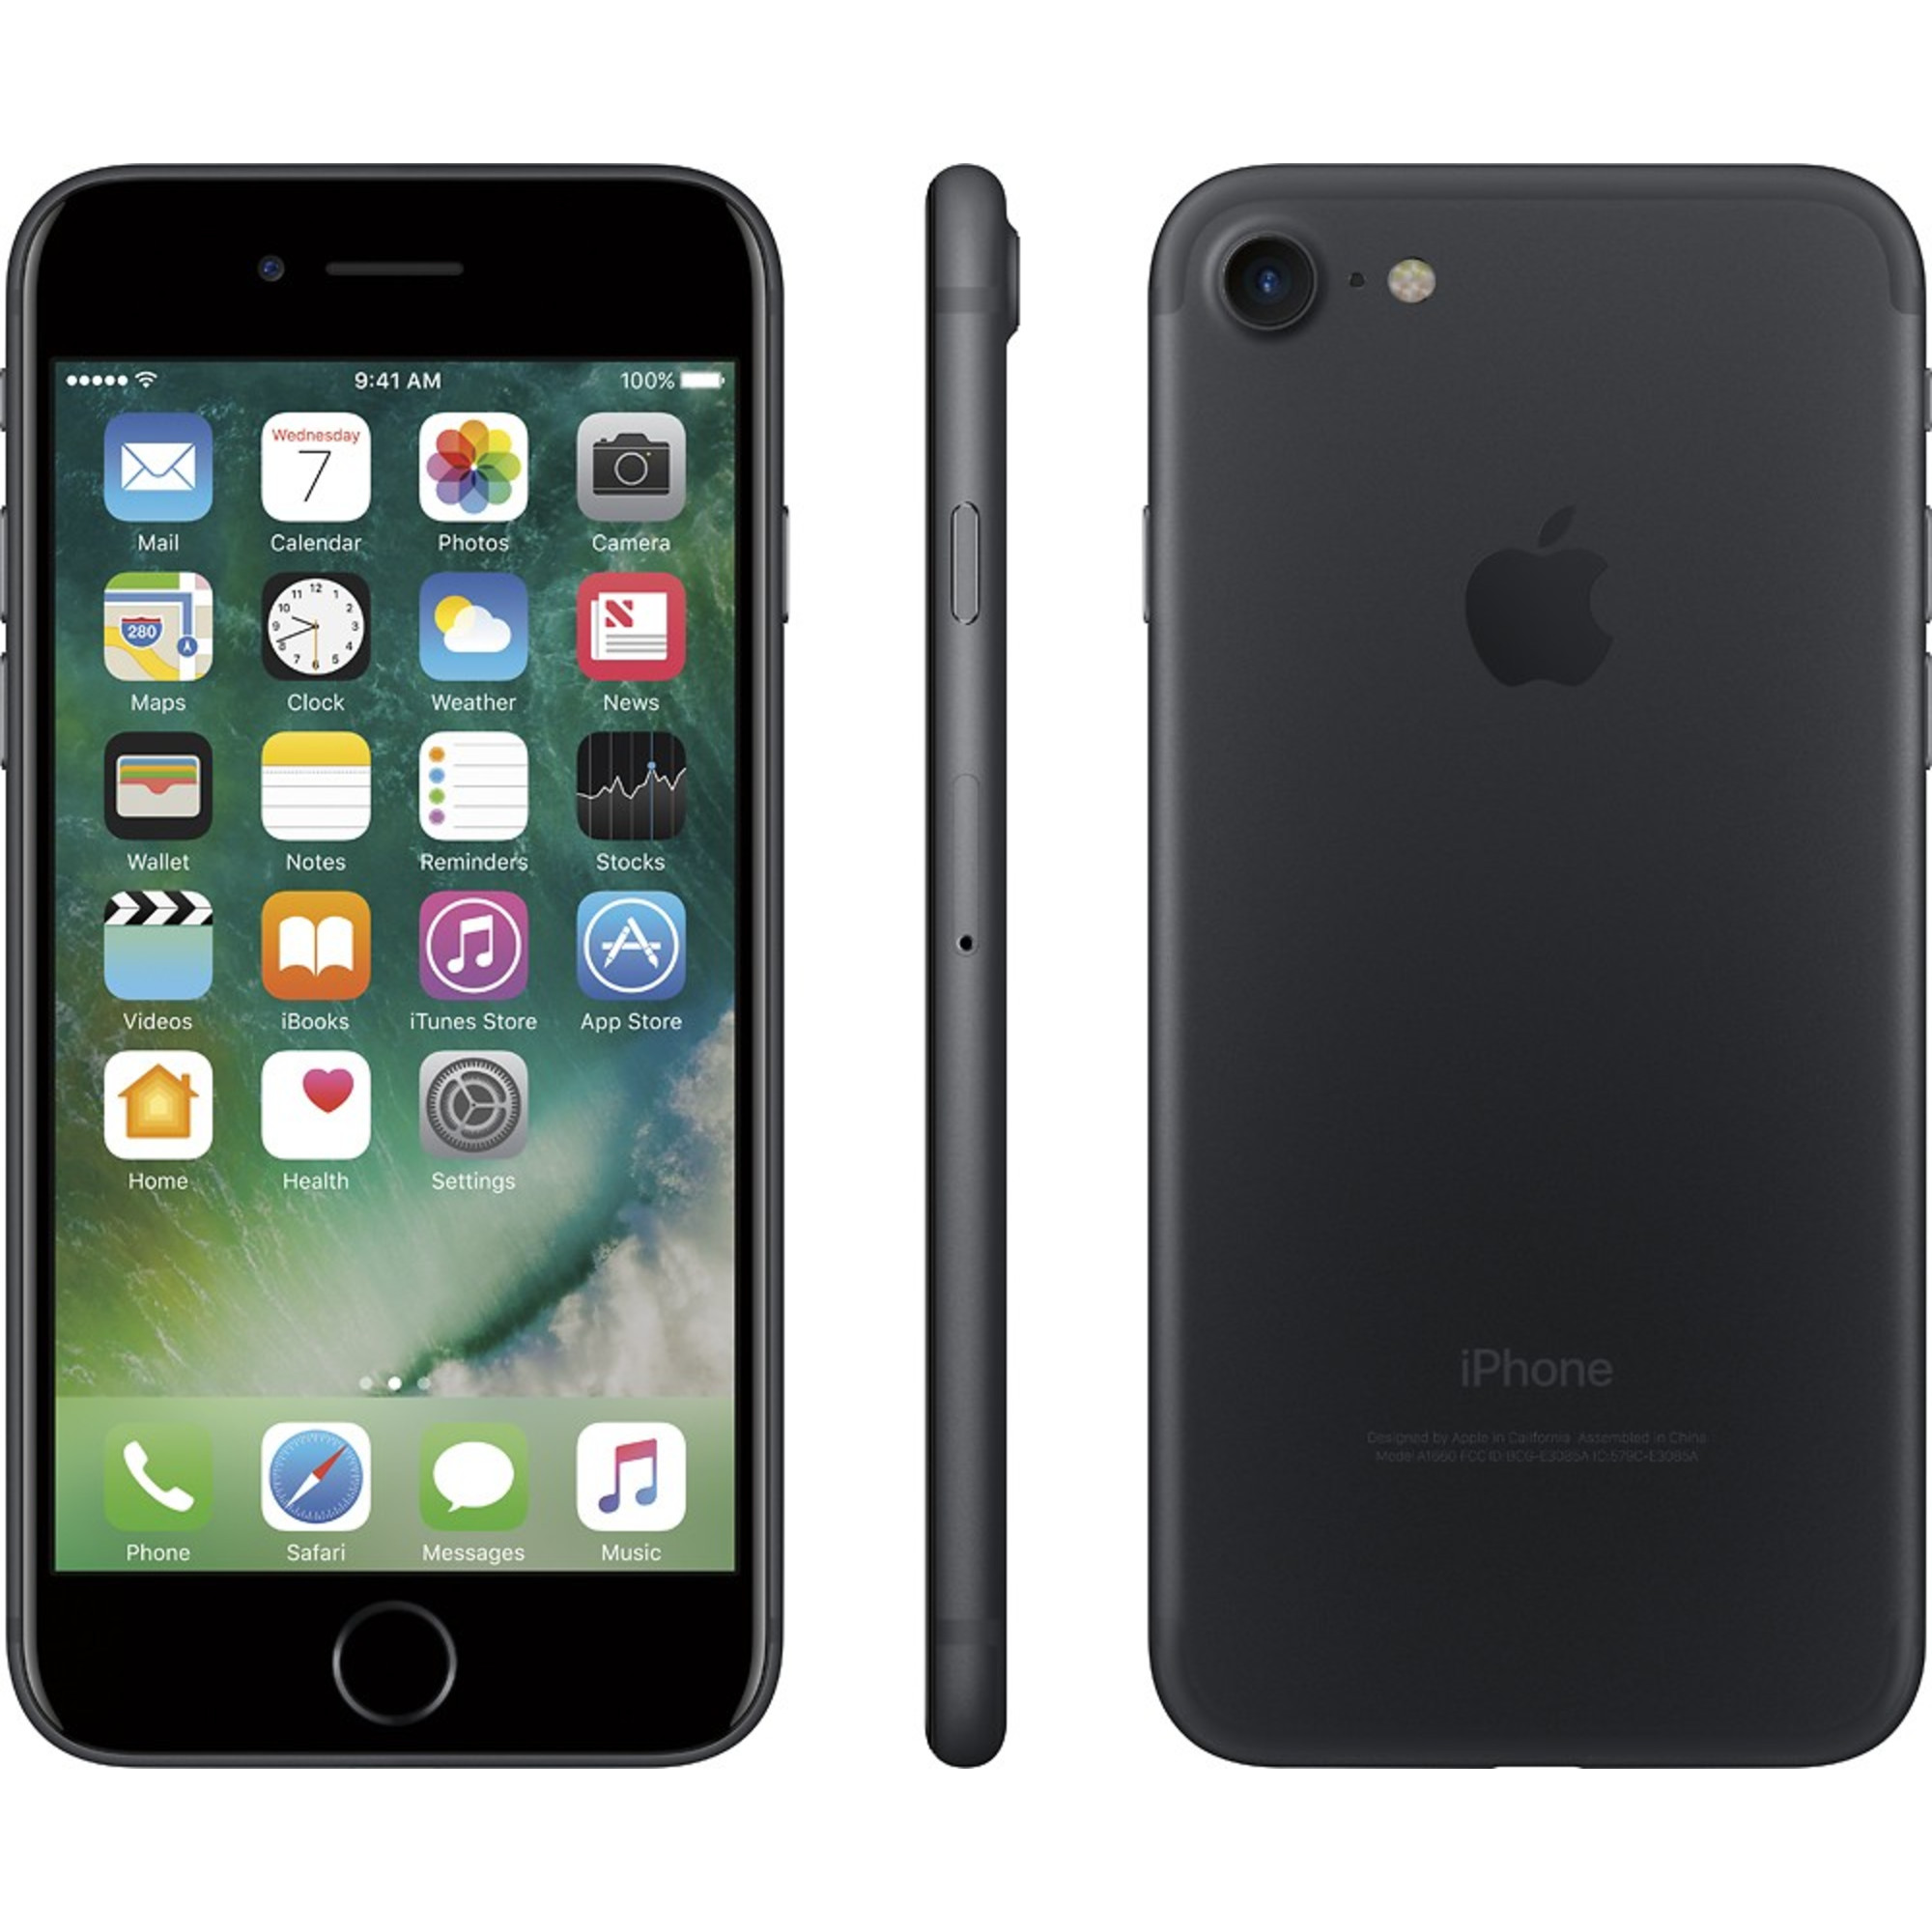 Apple iPhone 7 256GB Unlocked GSM Quad-Core 12MP Phone (Certified Refurbished)